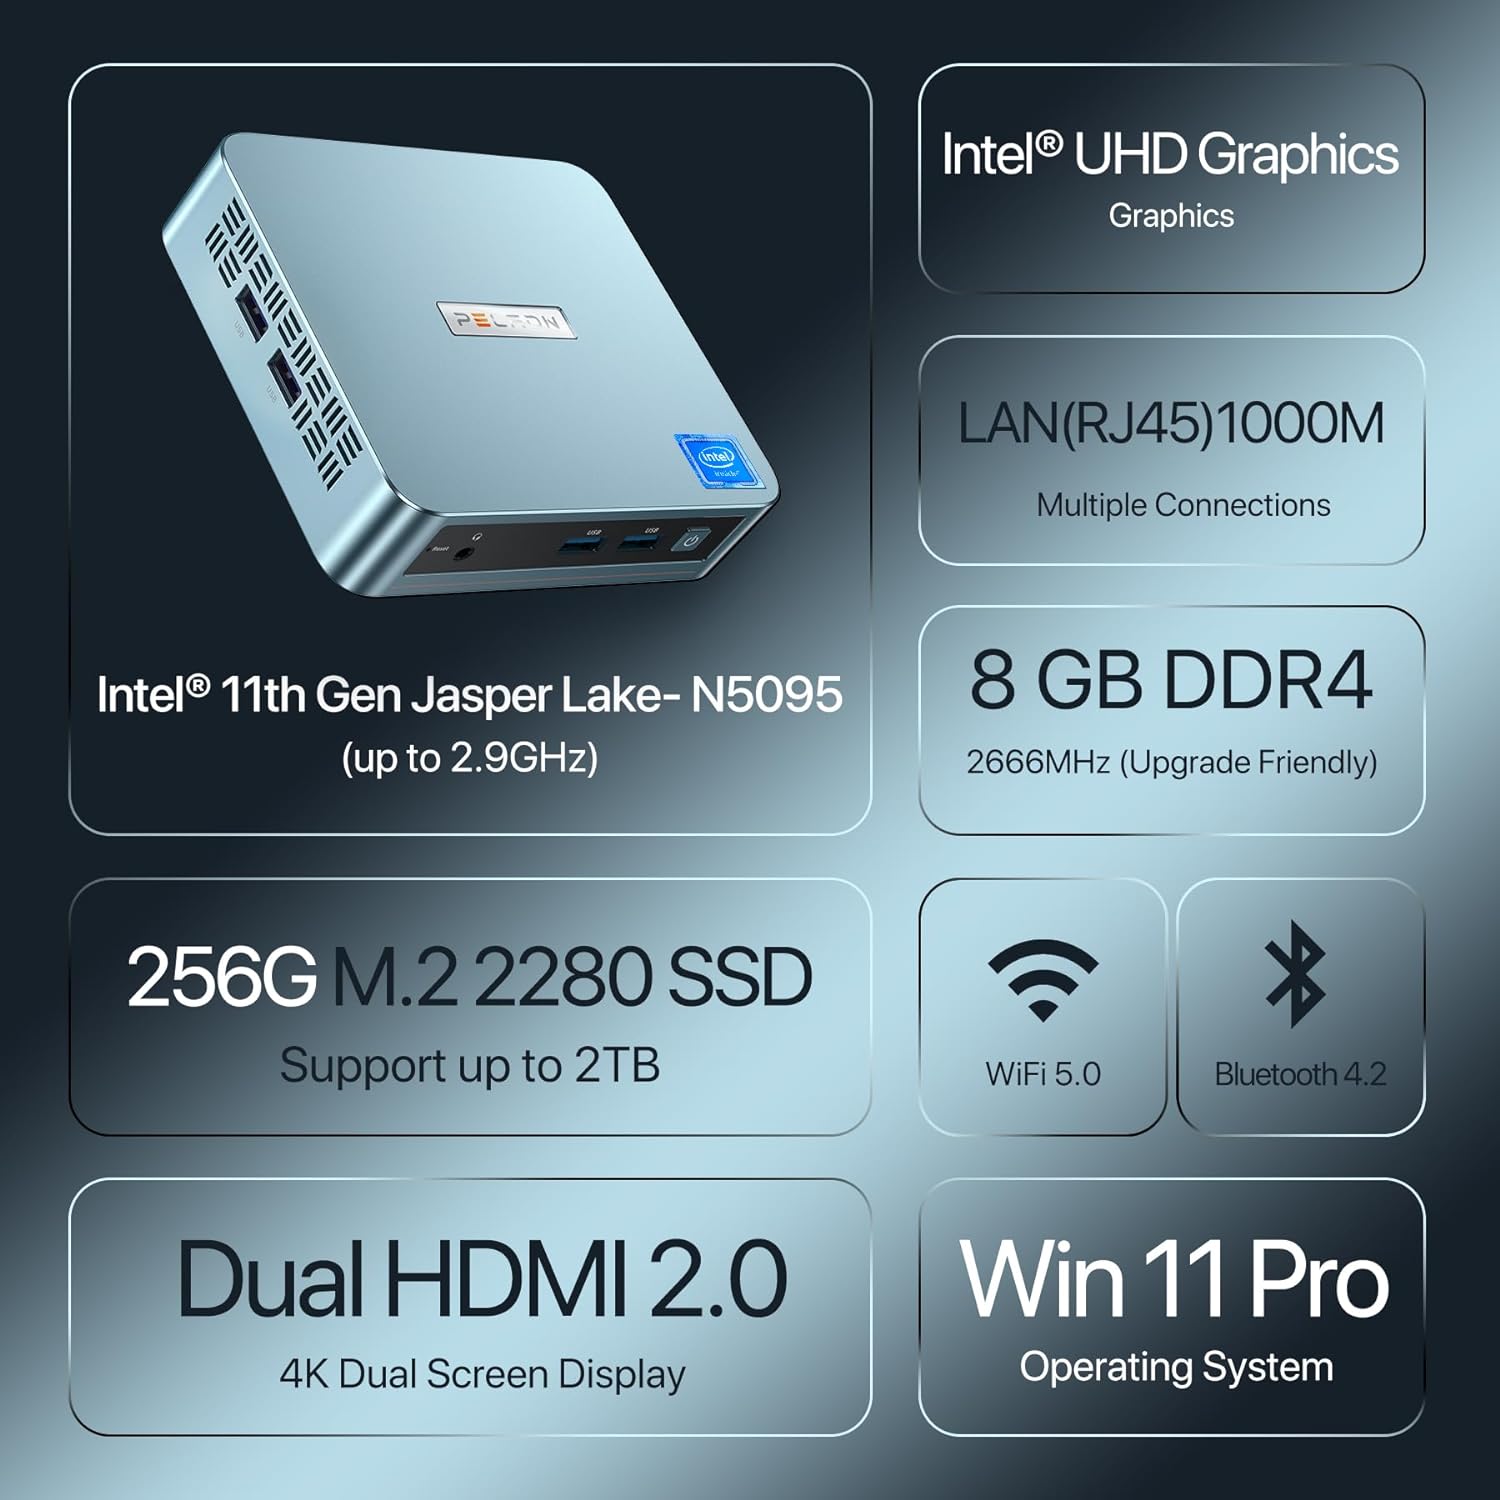 PELADN Mini PC, Intel 11th Gen N5095 (up to 2.9GHz) Win11 Pro, 8GB DDR4 RAM, 256GB SSD, 4K HD, BT4.2, Dual HDMI, WiFi 2.4G/5G, Gigabit Ethernet. Small Desktop PC.